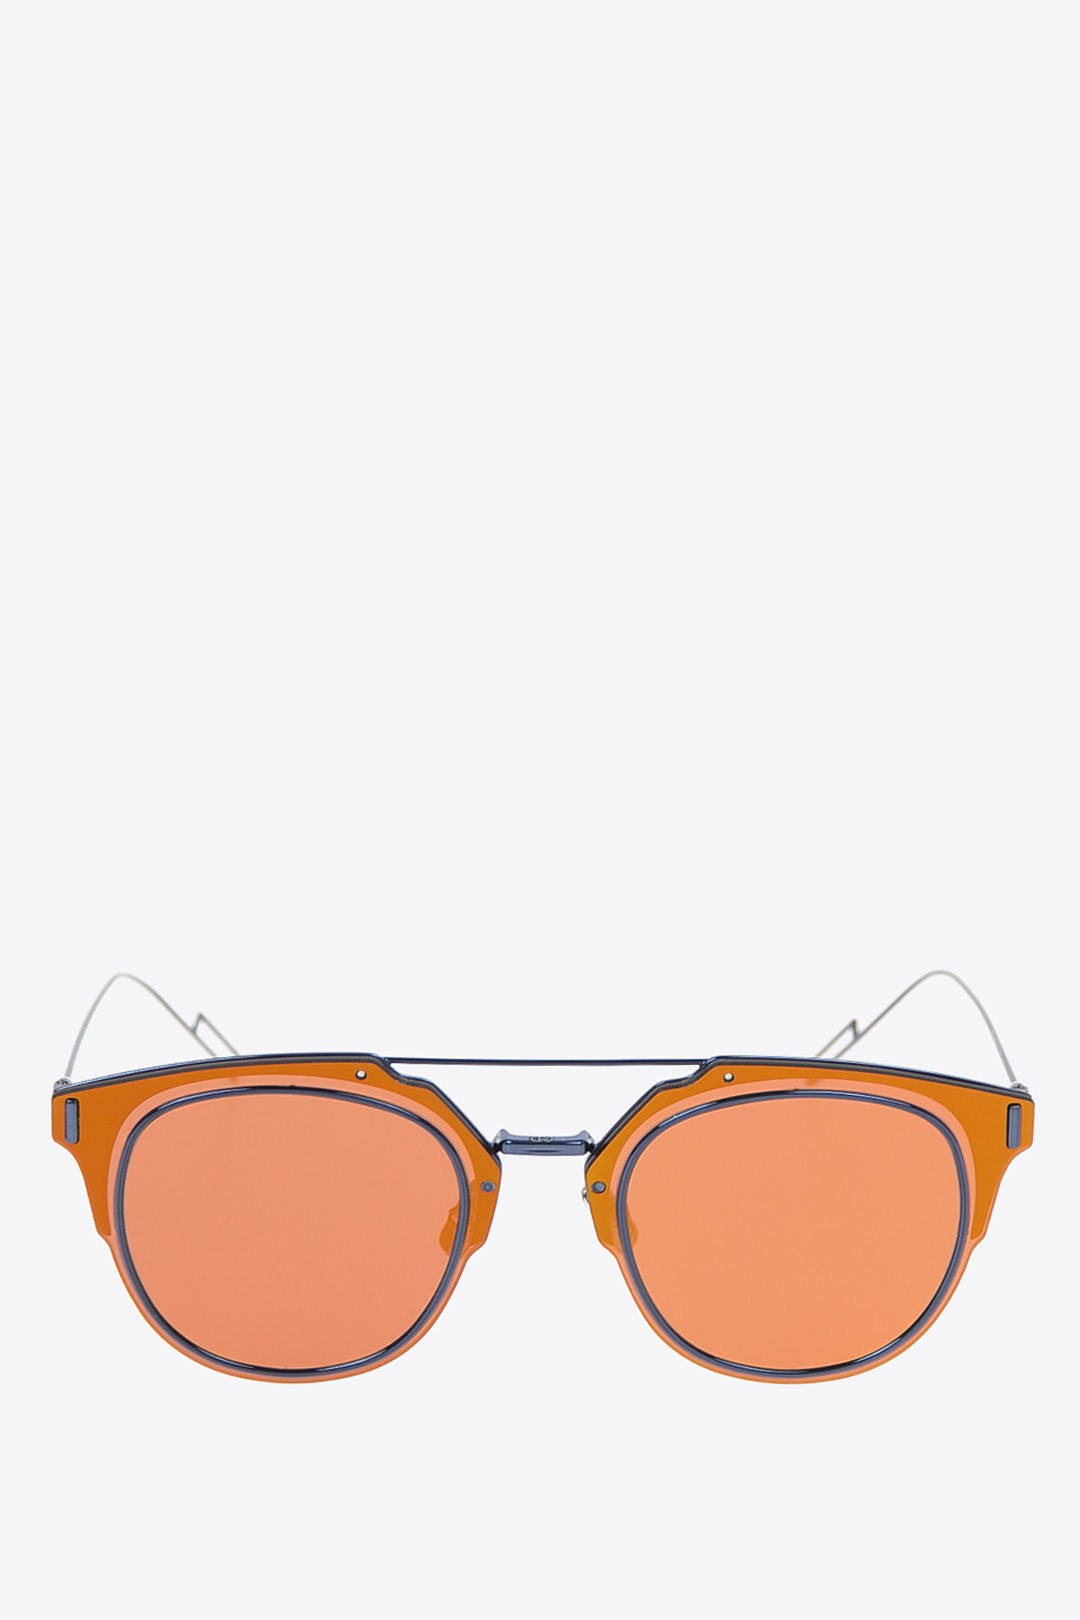 6 dior mirror lenses sunglasses fall winter 2016 2015 abstract tortoise  giulia de martin behindmyglassescom  Behindmyglasses